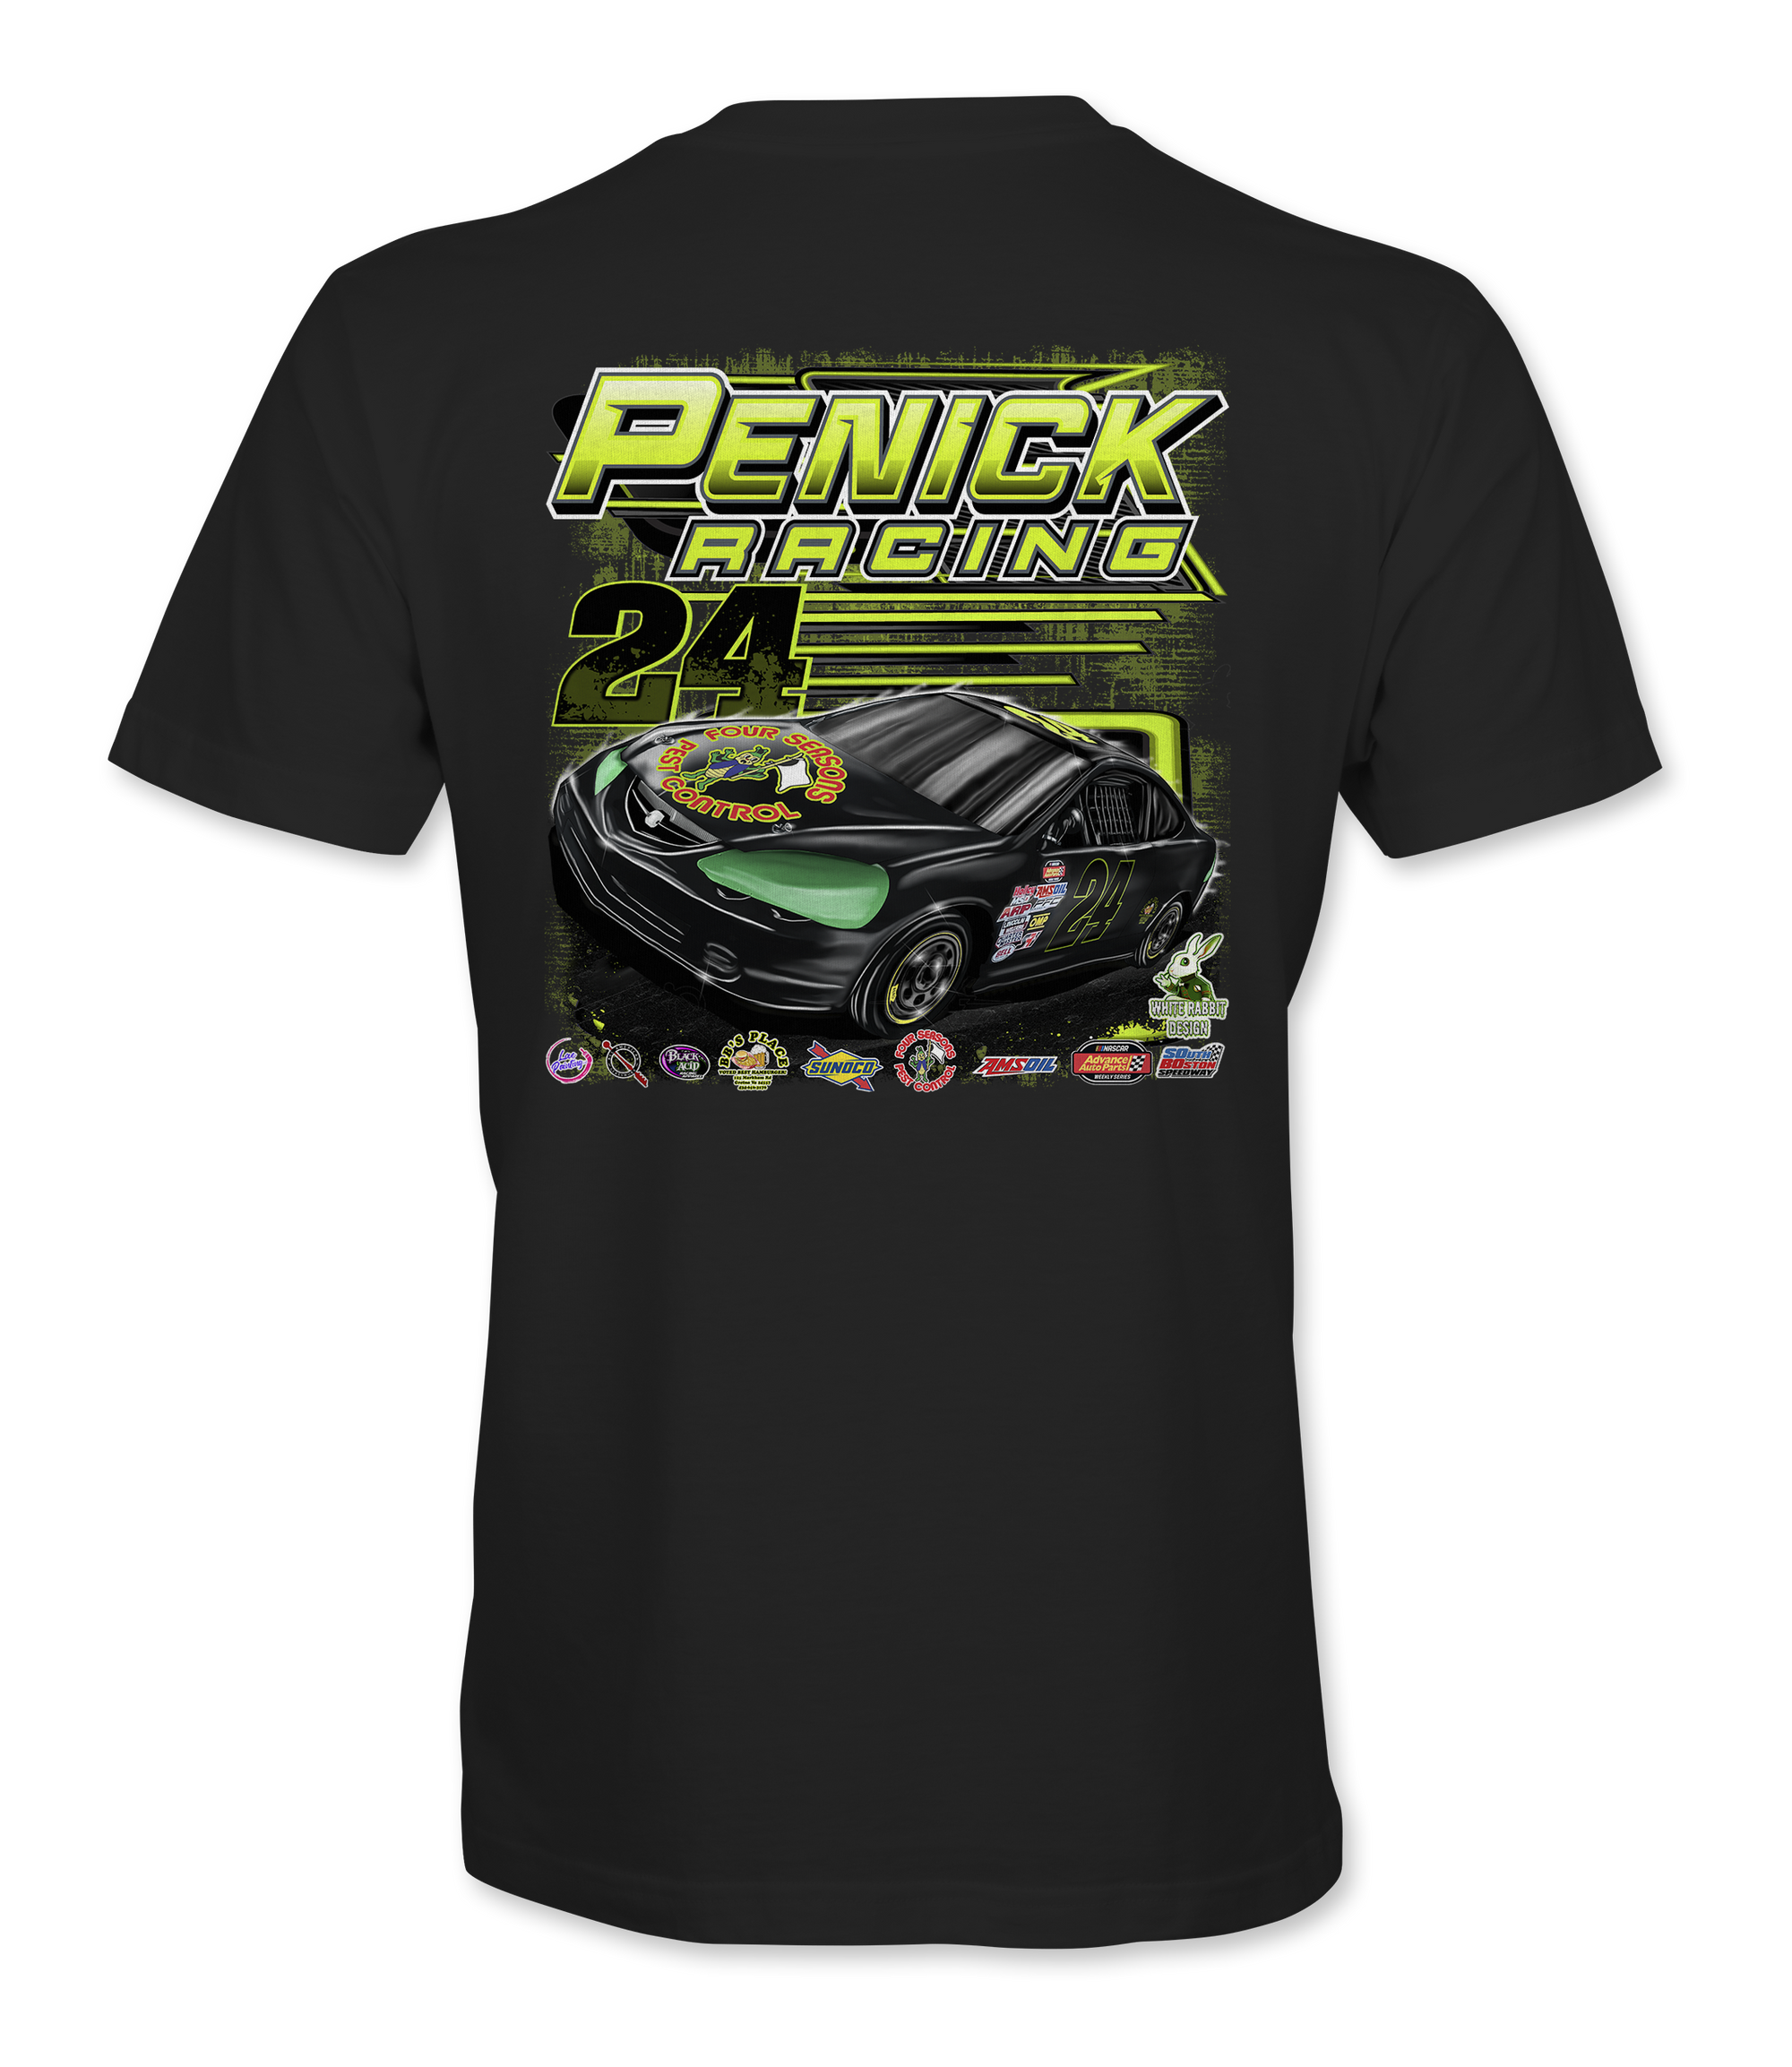 Chris Penick T-Shirts